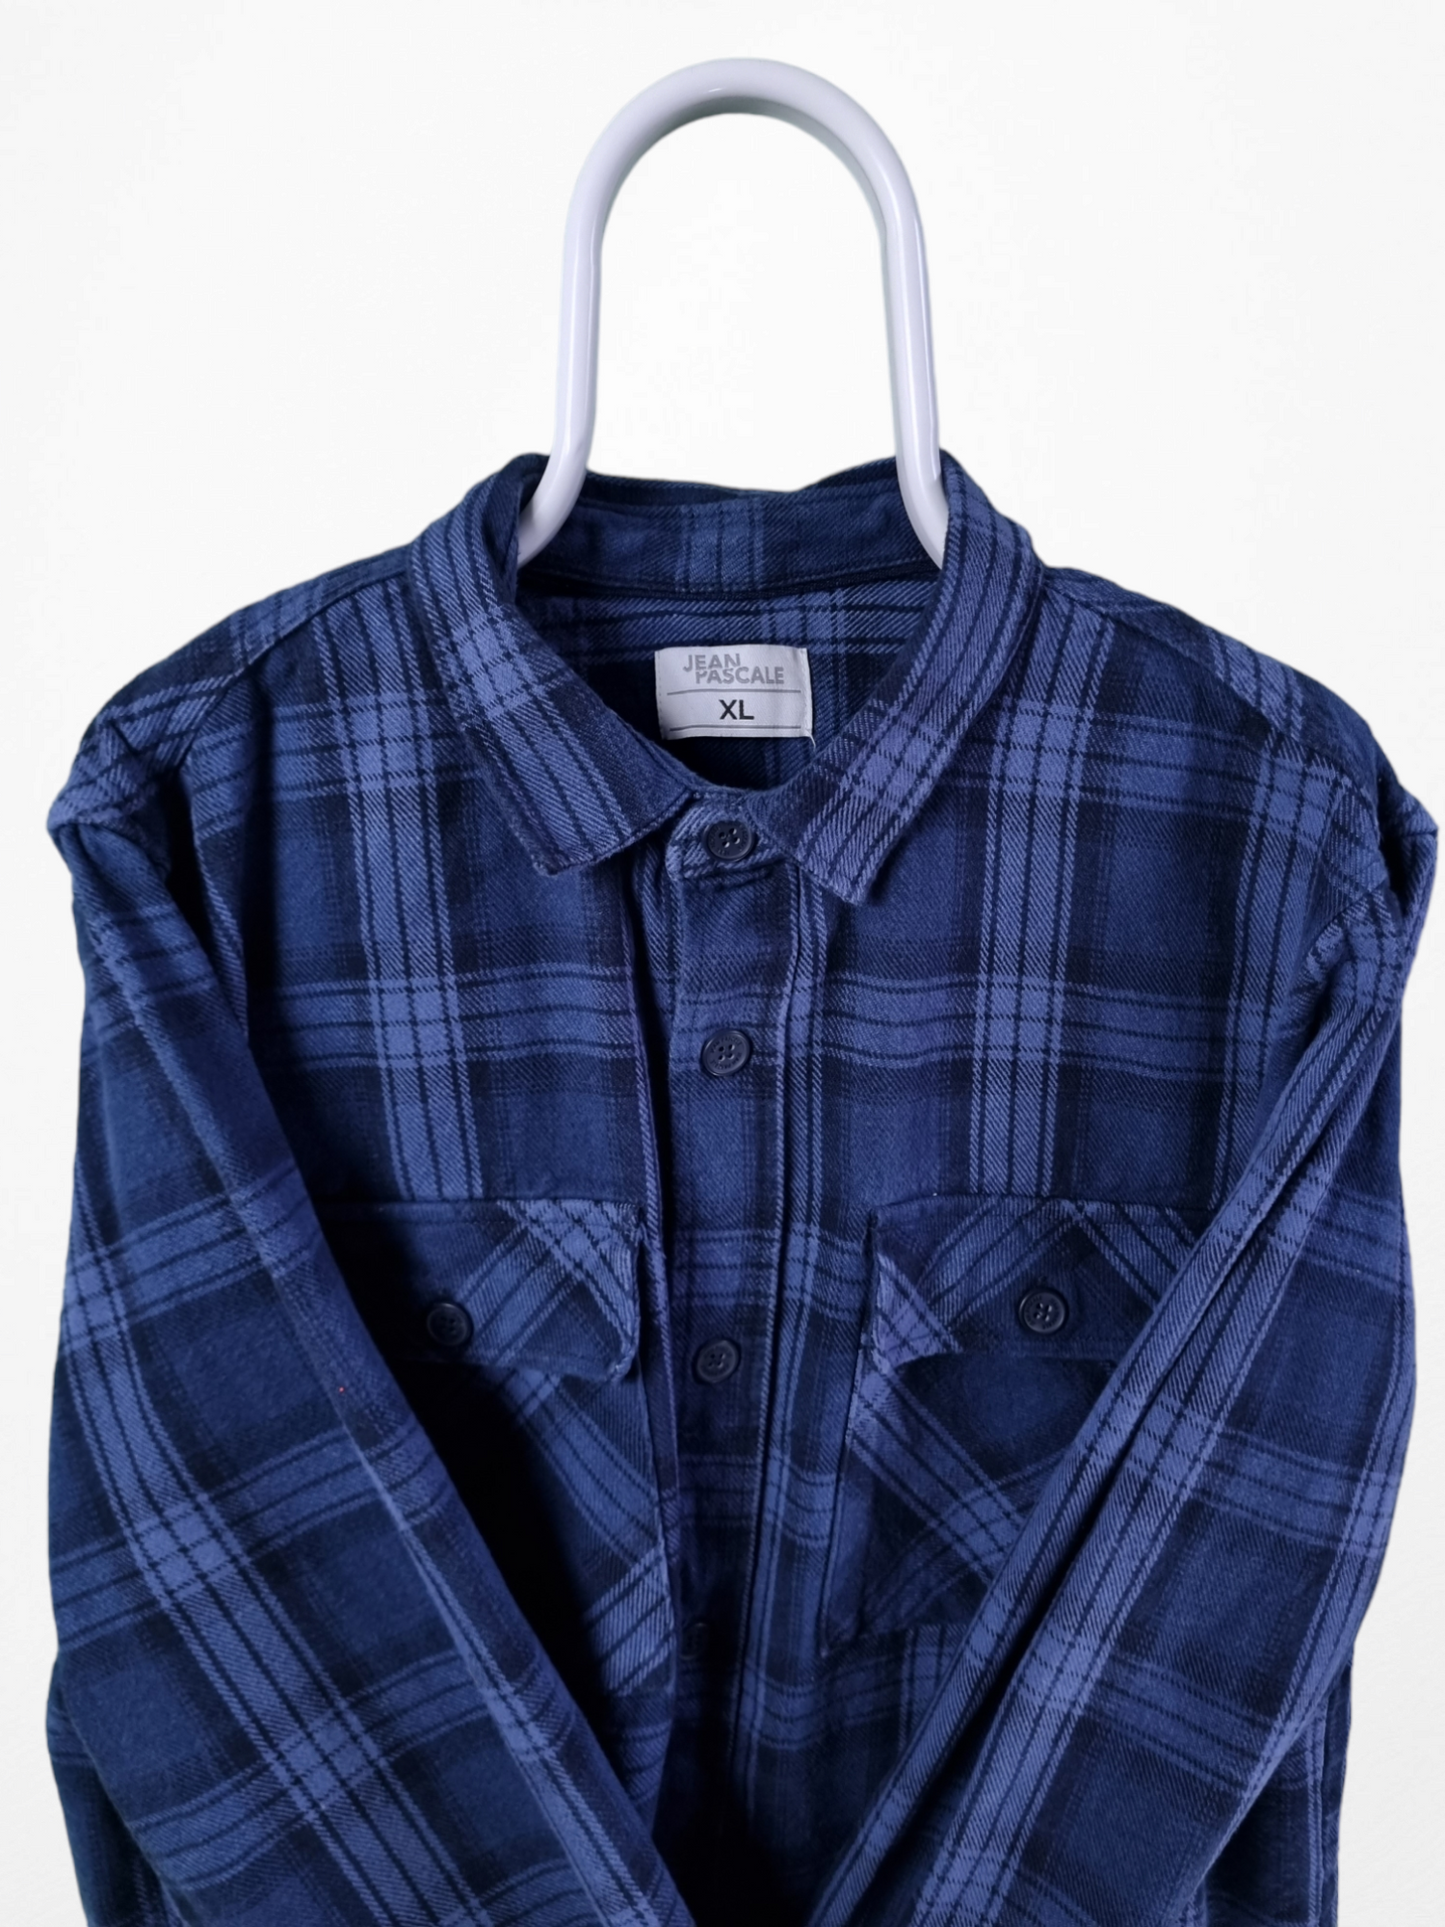 Vintage heavy weigth check shirt XL